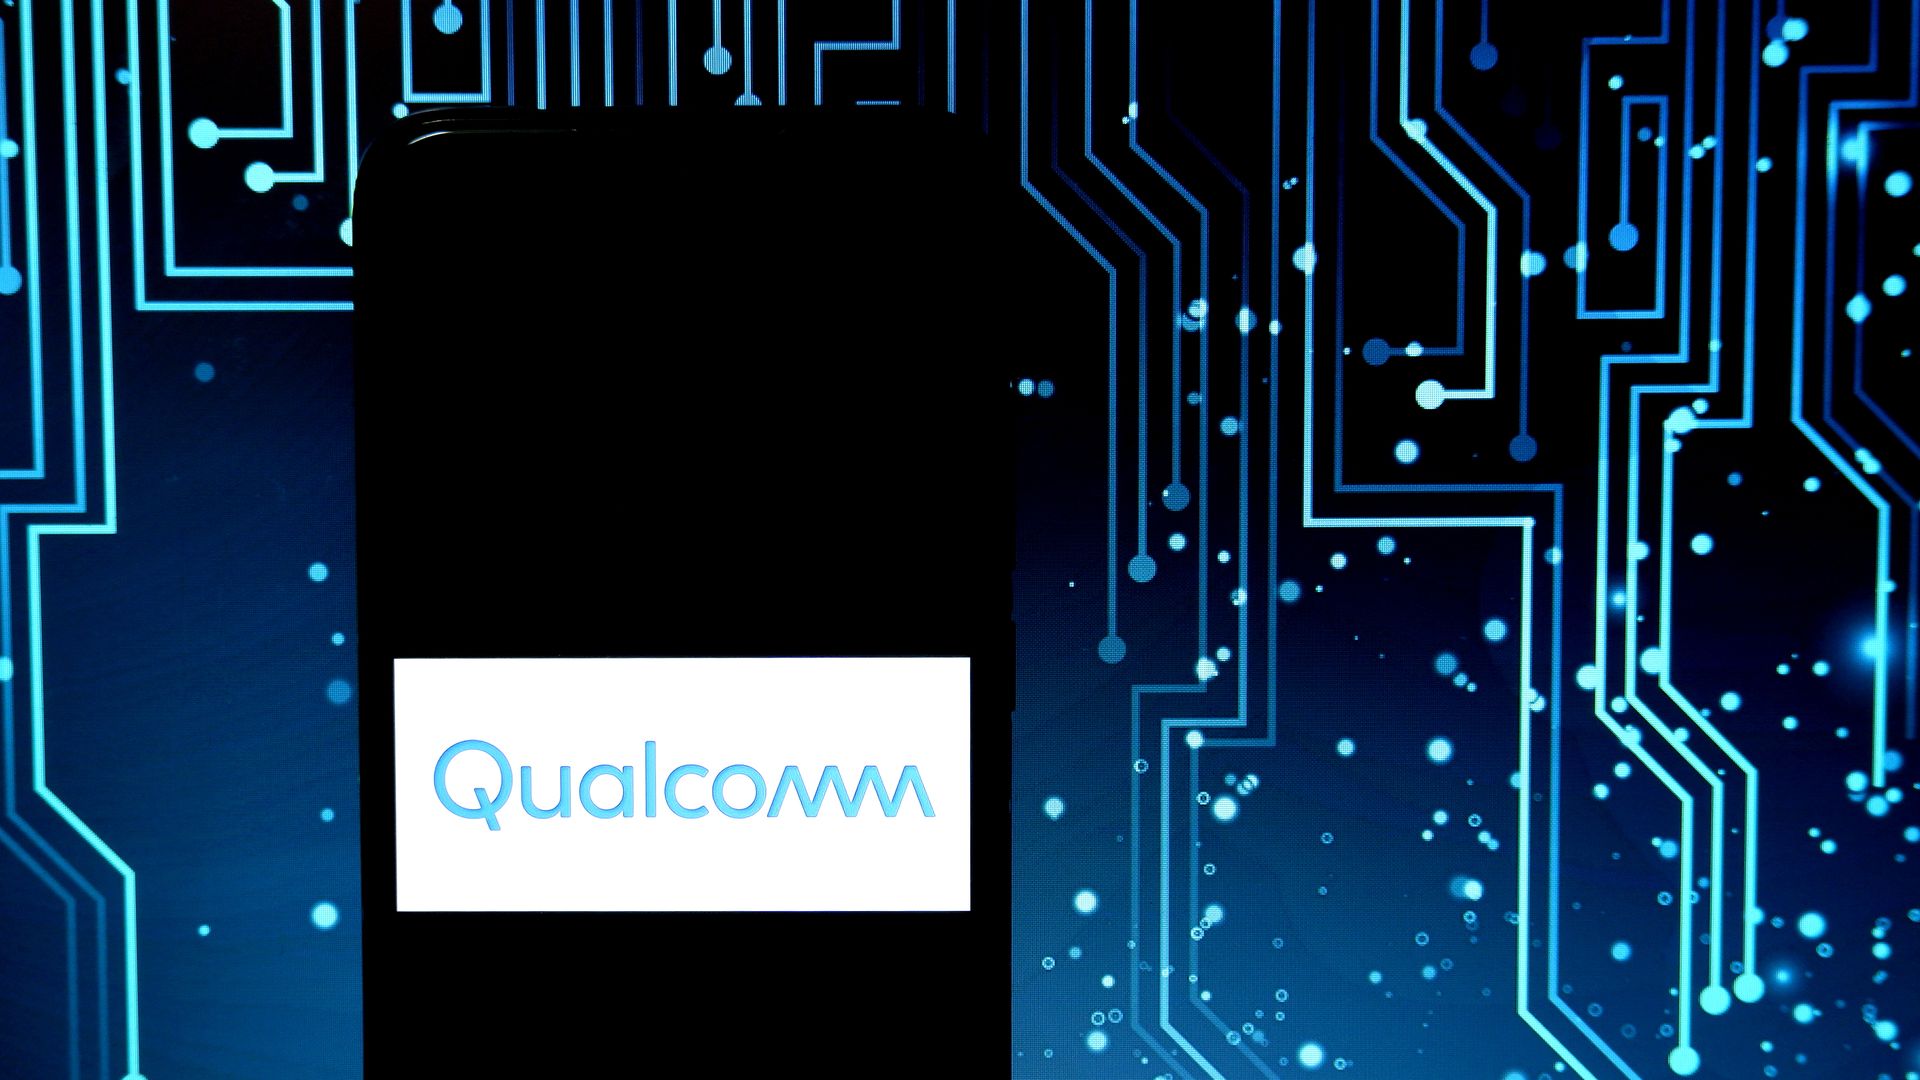 Photo illustration of microcircuits around the Qualcomm logo.